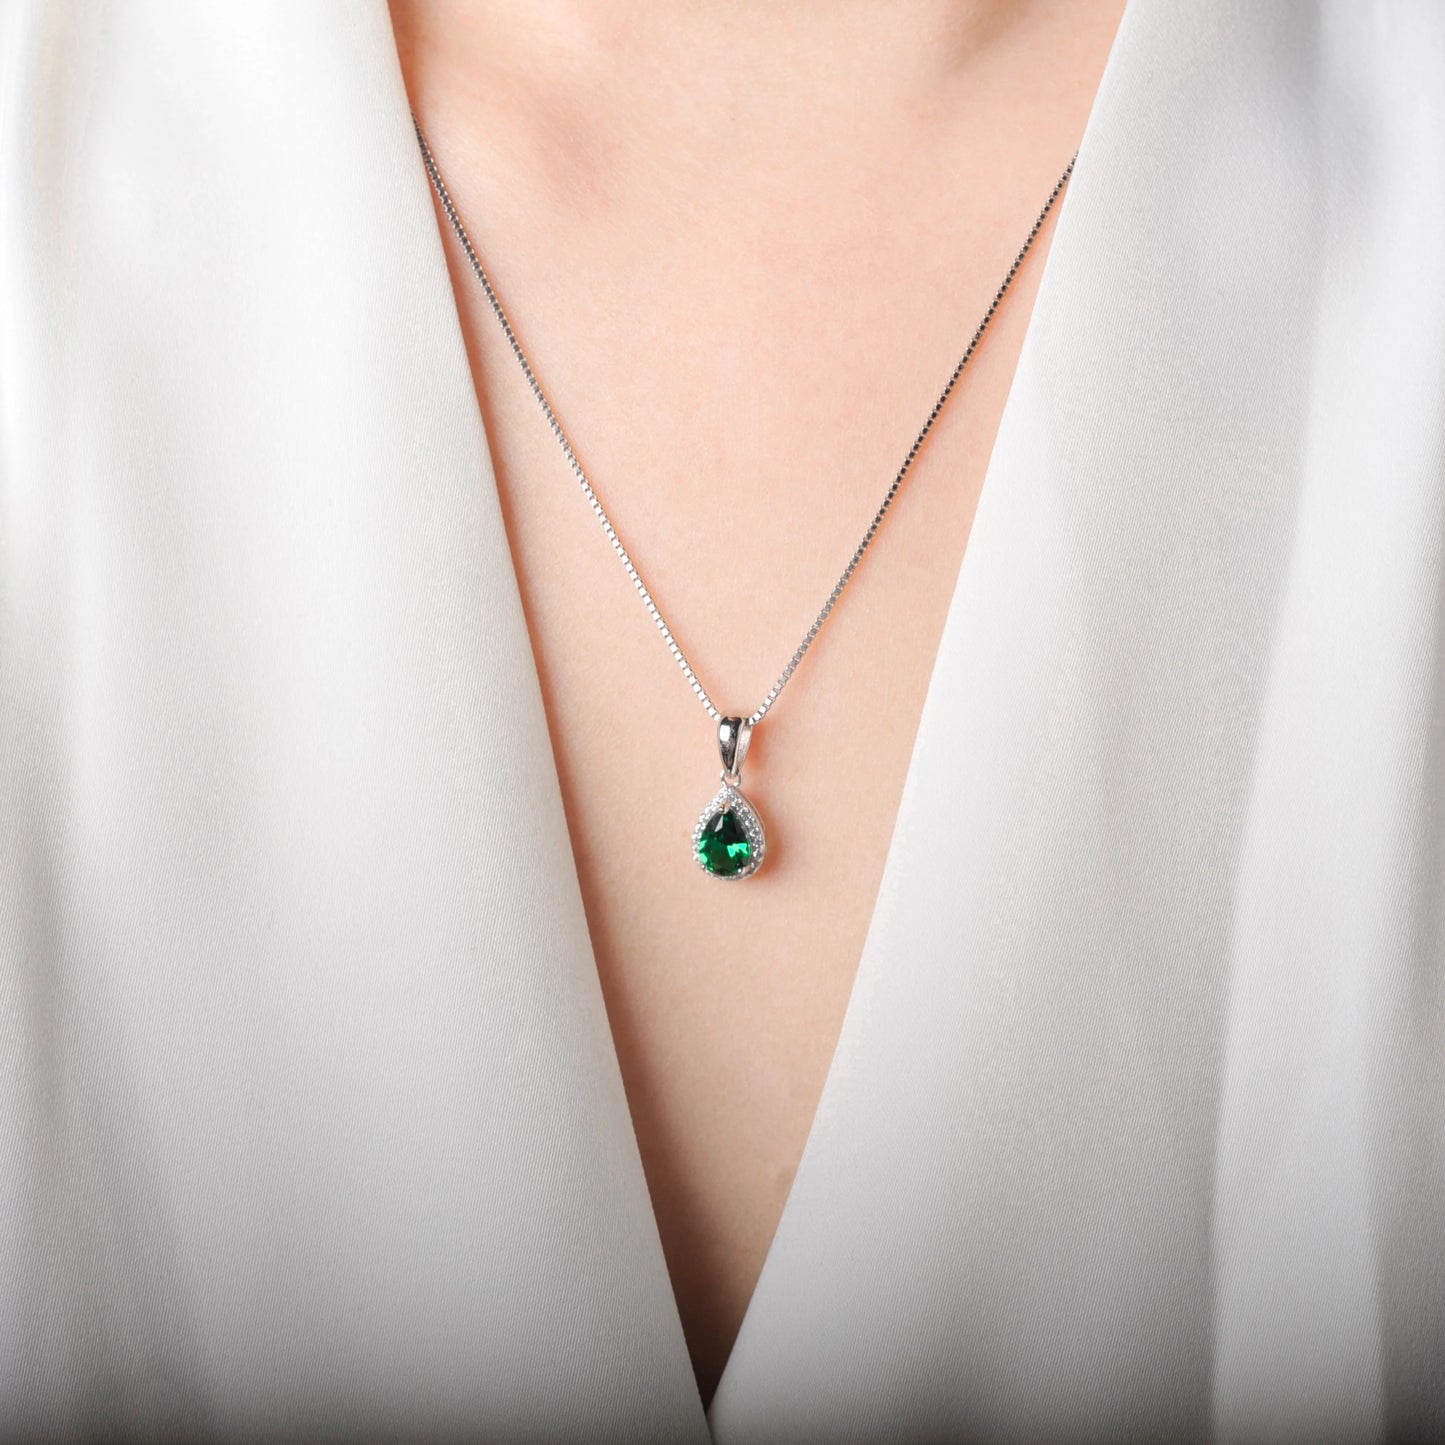 Potiy Pear Simulated Nano Emerald 925 Sterling Silver Pendant Necklace no Chain Women Gemstone Statement Daily mini cute gift